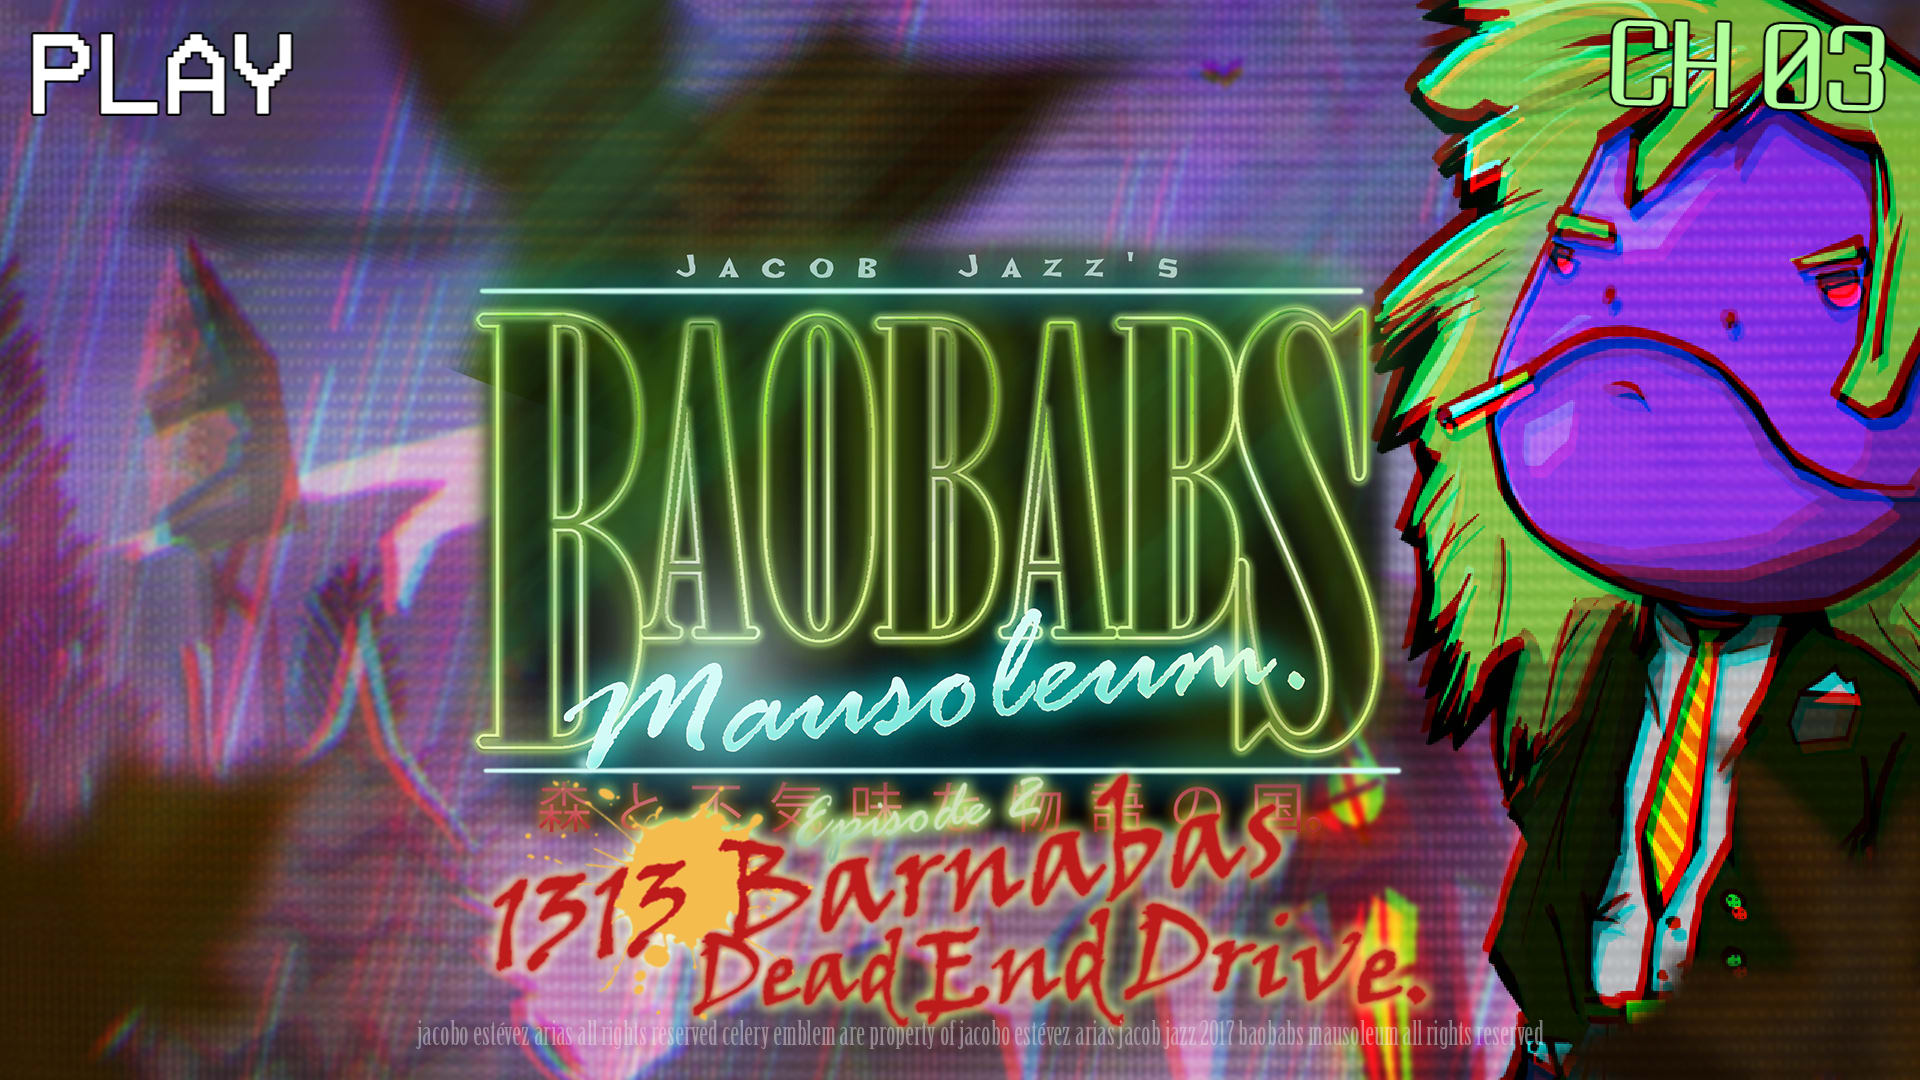 Baobabs Mausoleum Ep.2: 1313 Barnabas Dead End Drive